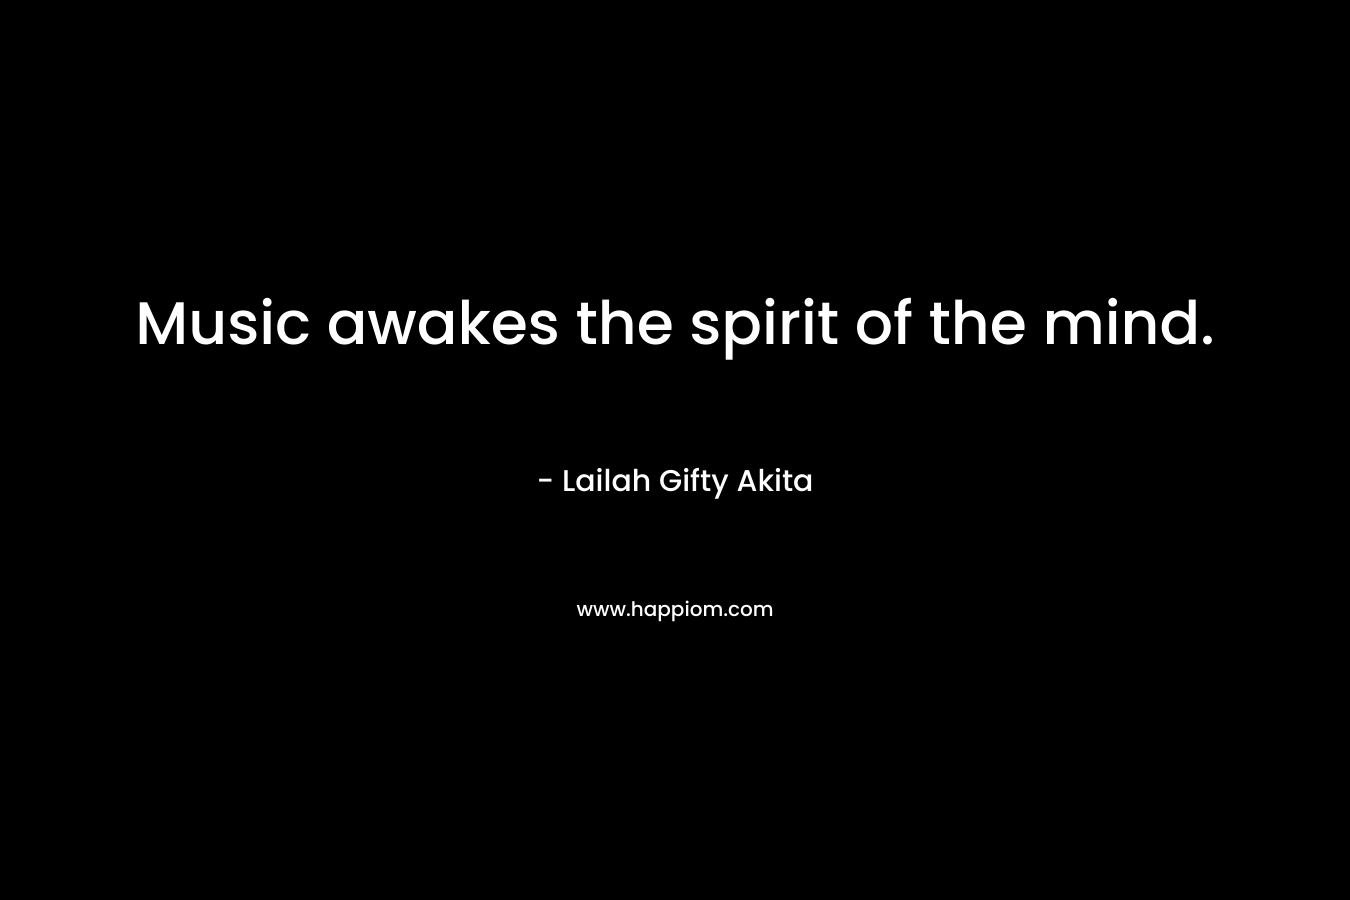 Music awakes the spirit of the mind.